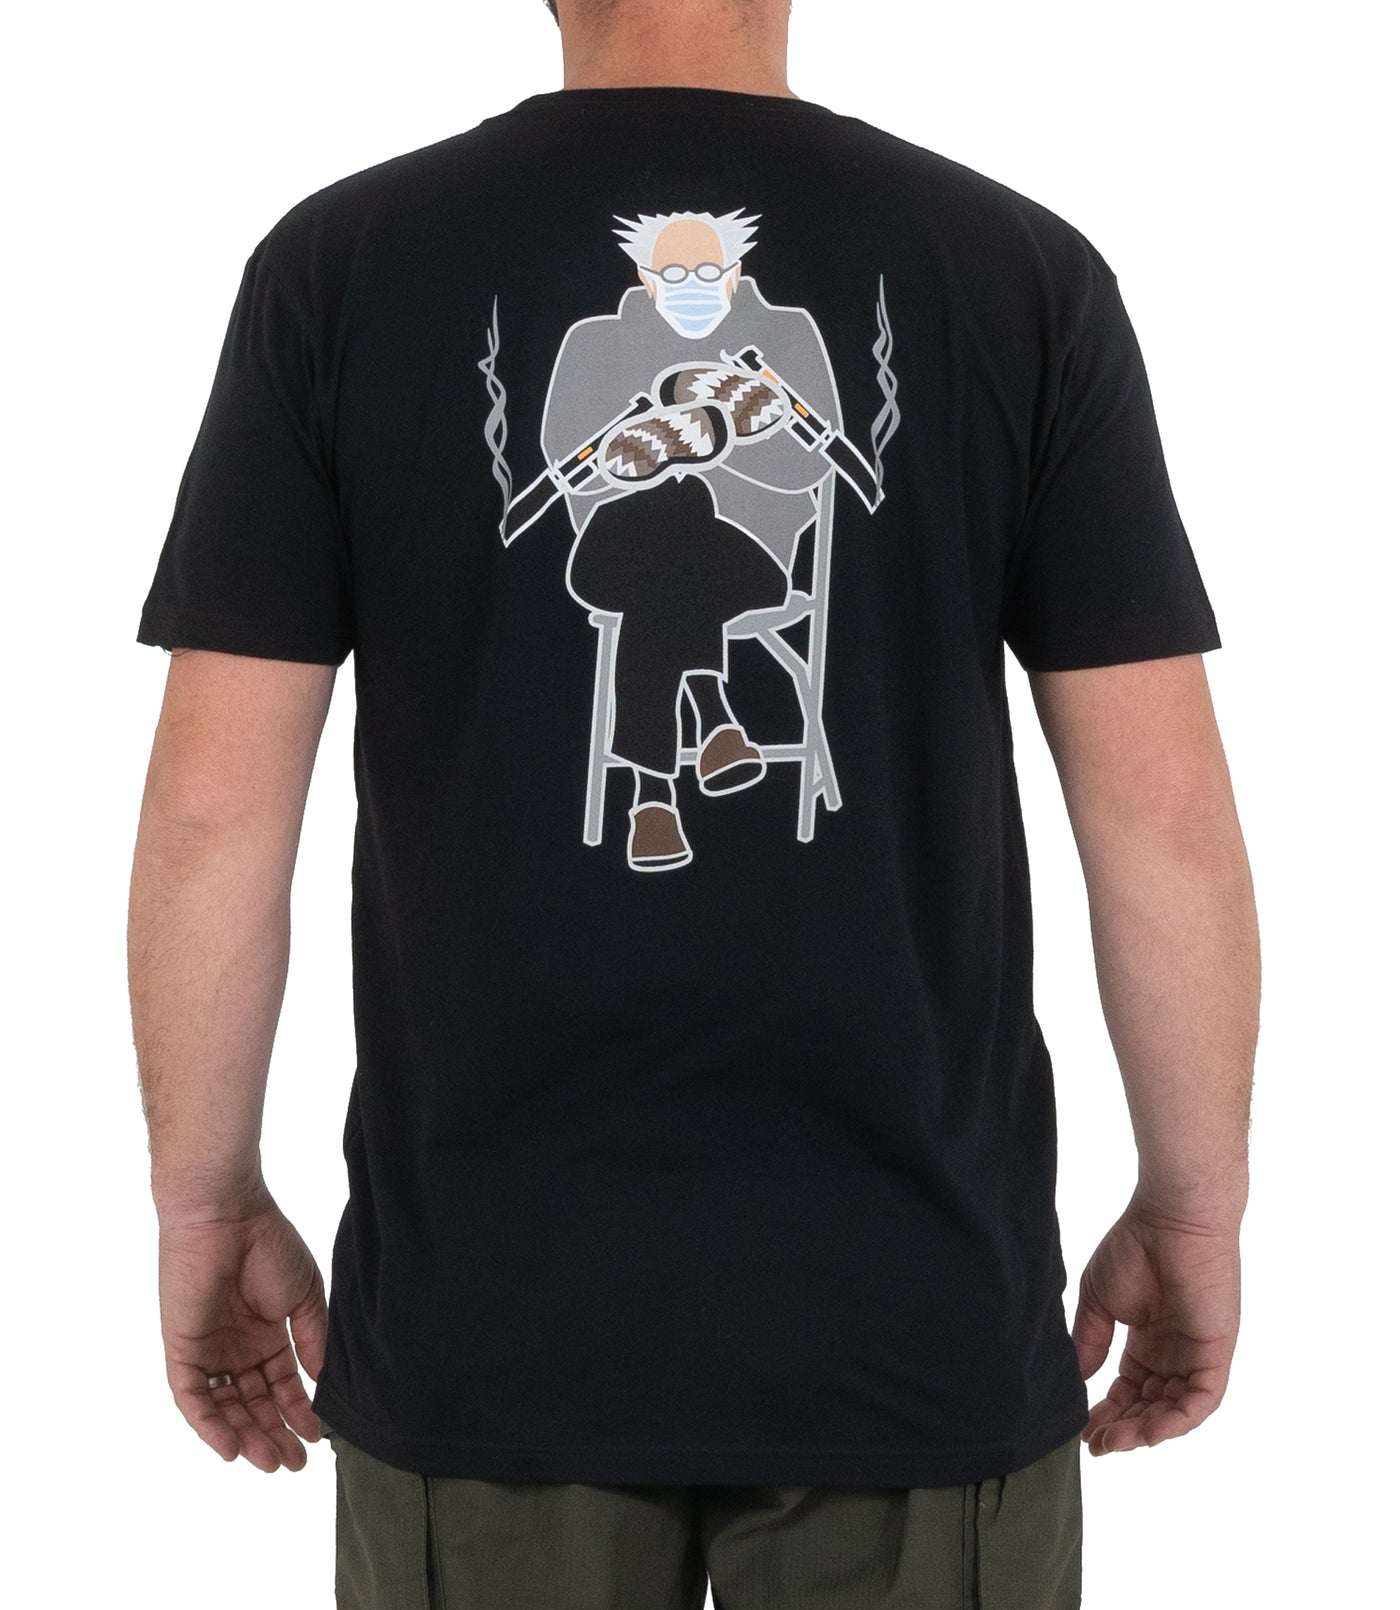 T-Shirt Bern Bad – Tactical First